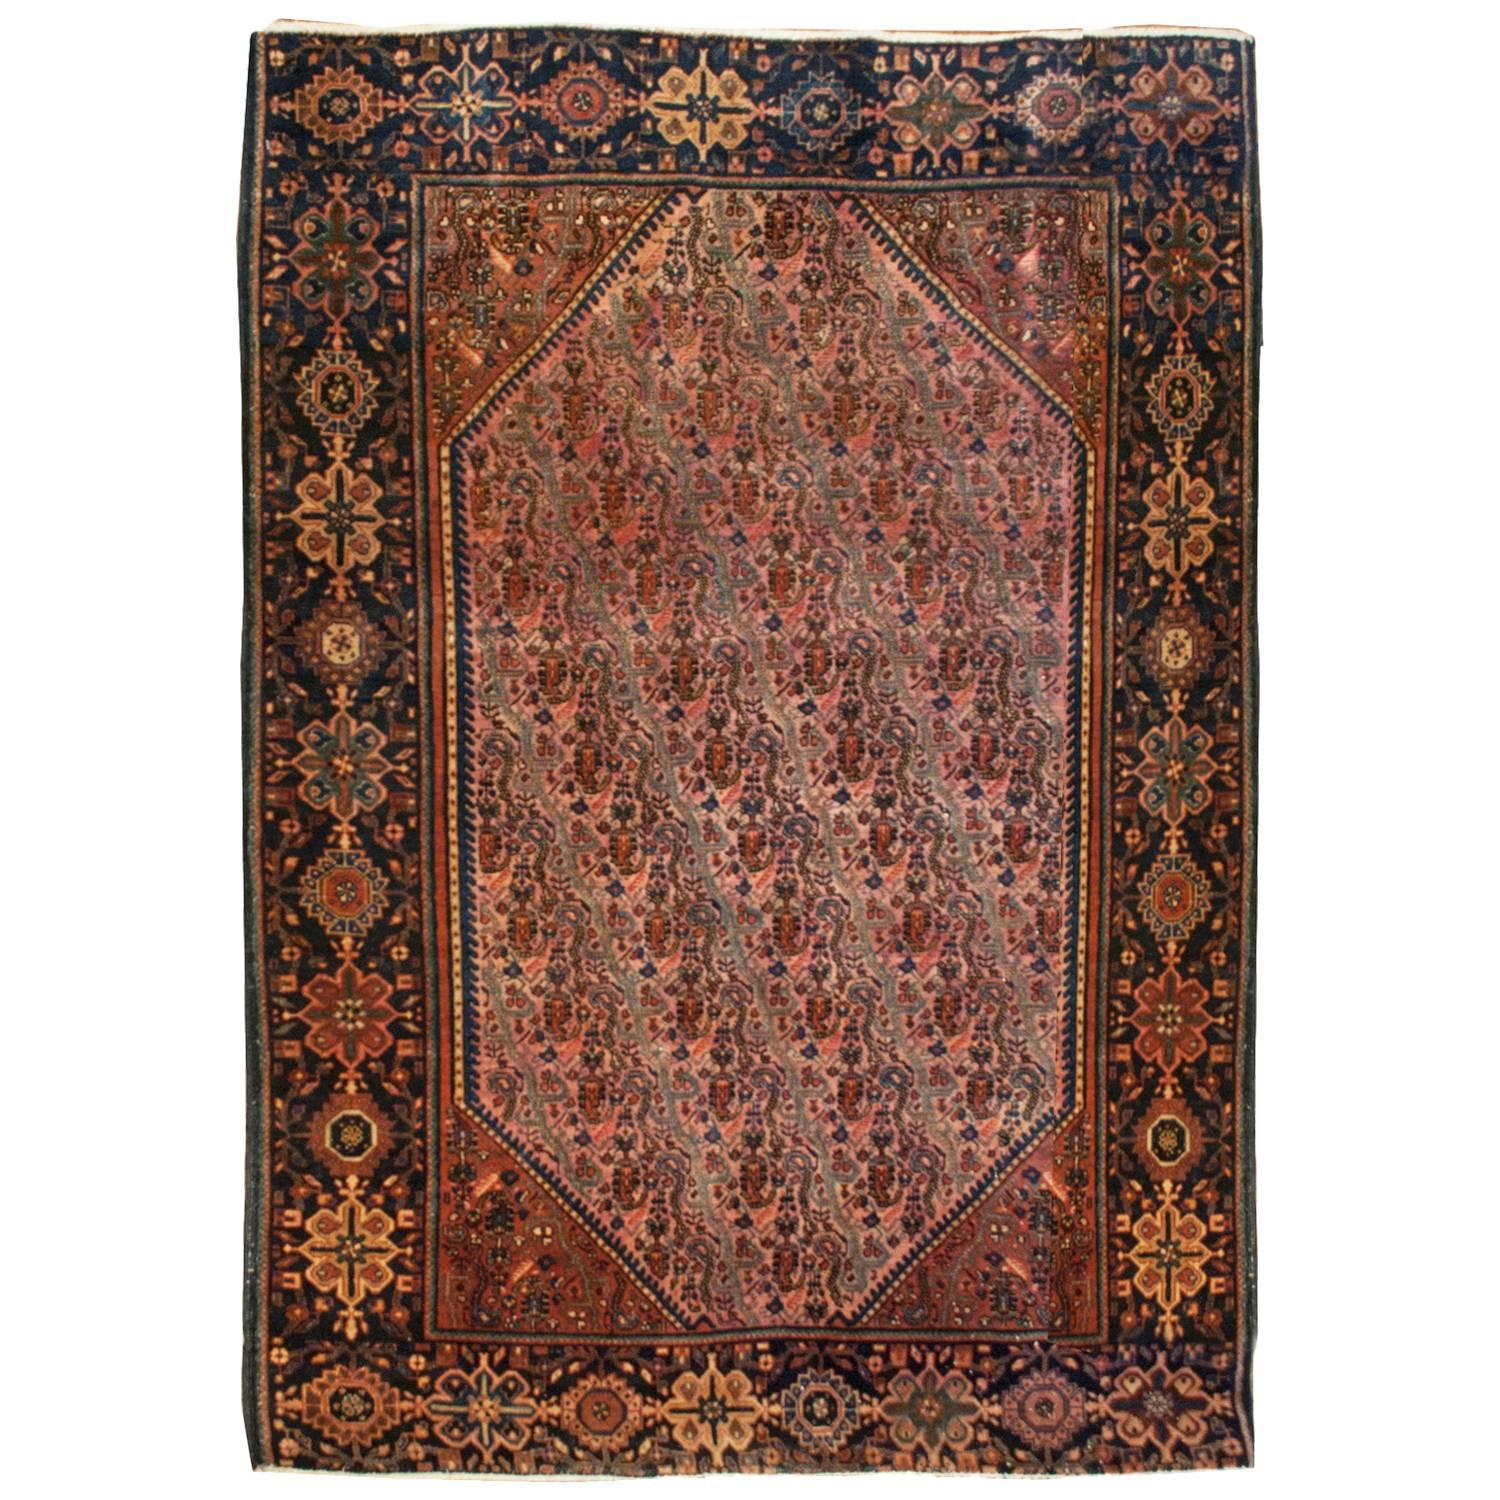 Extraordinaire tapis Sarouk Farahan du 19ème siècle